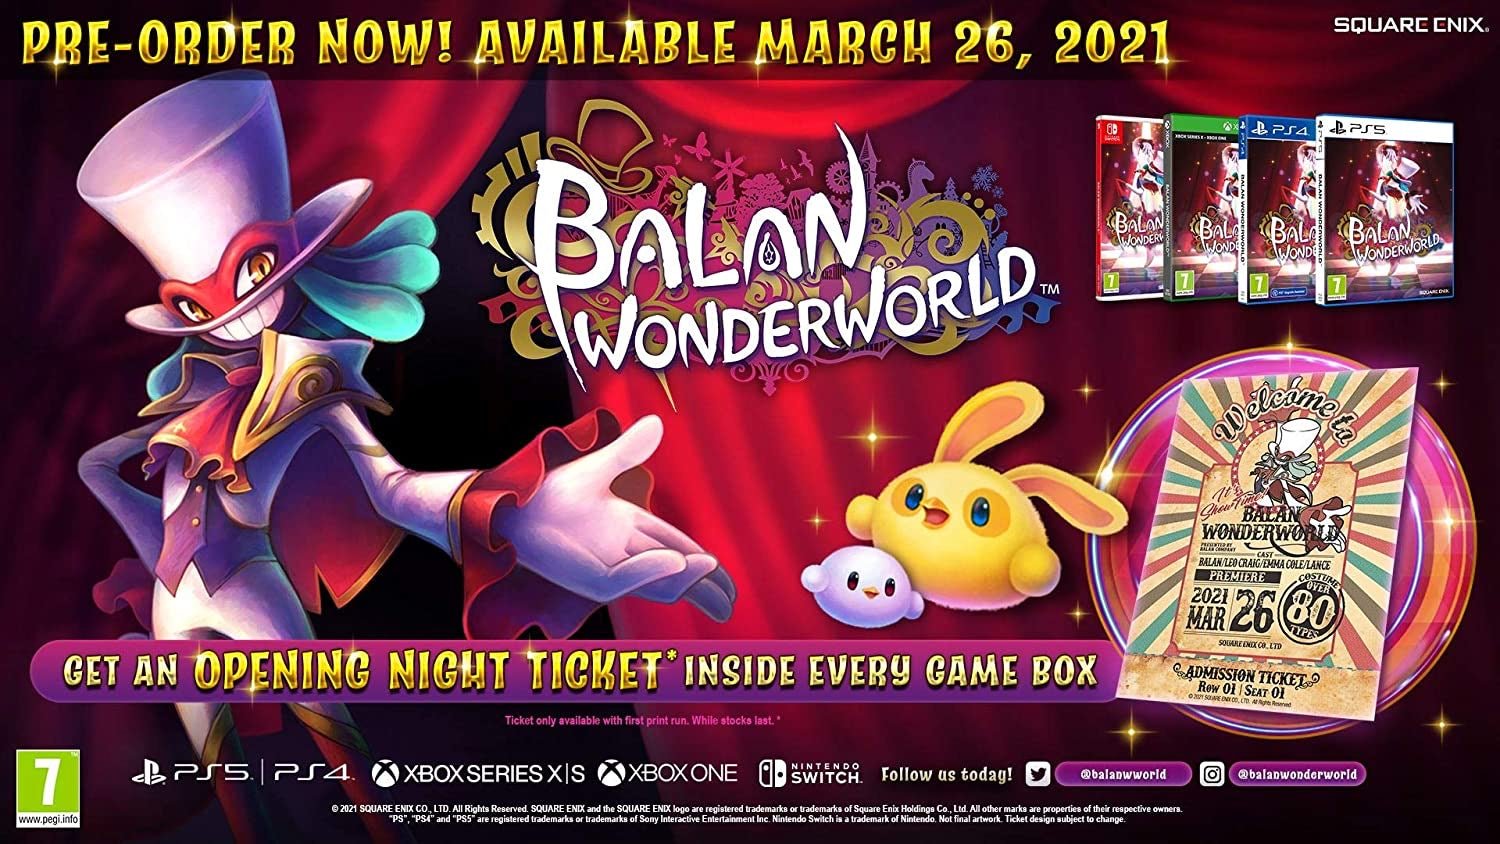 Balan Wonderworld For PlayStation 5 - Level UpLevel UpPlaystation Video Games